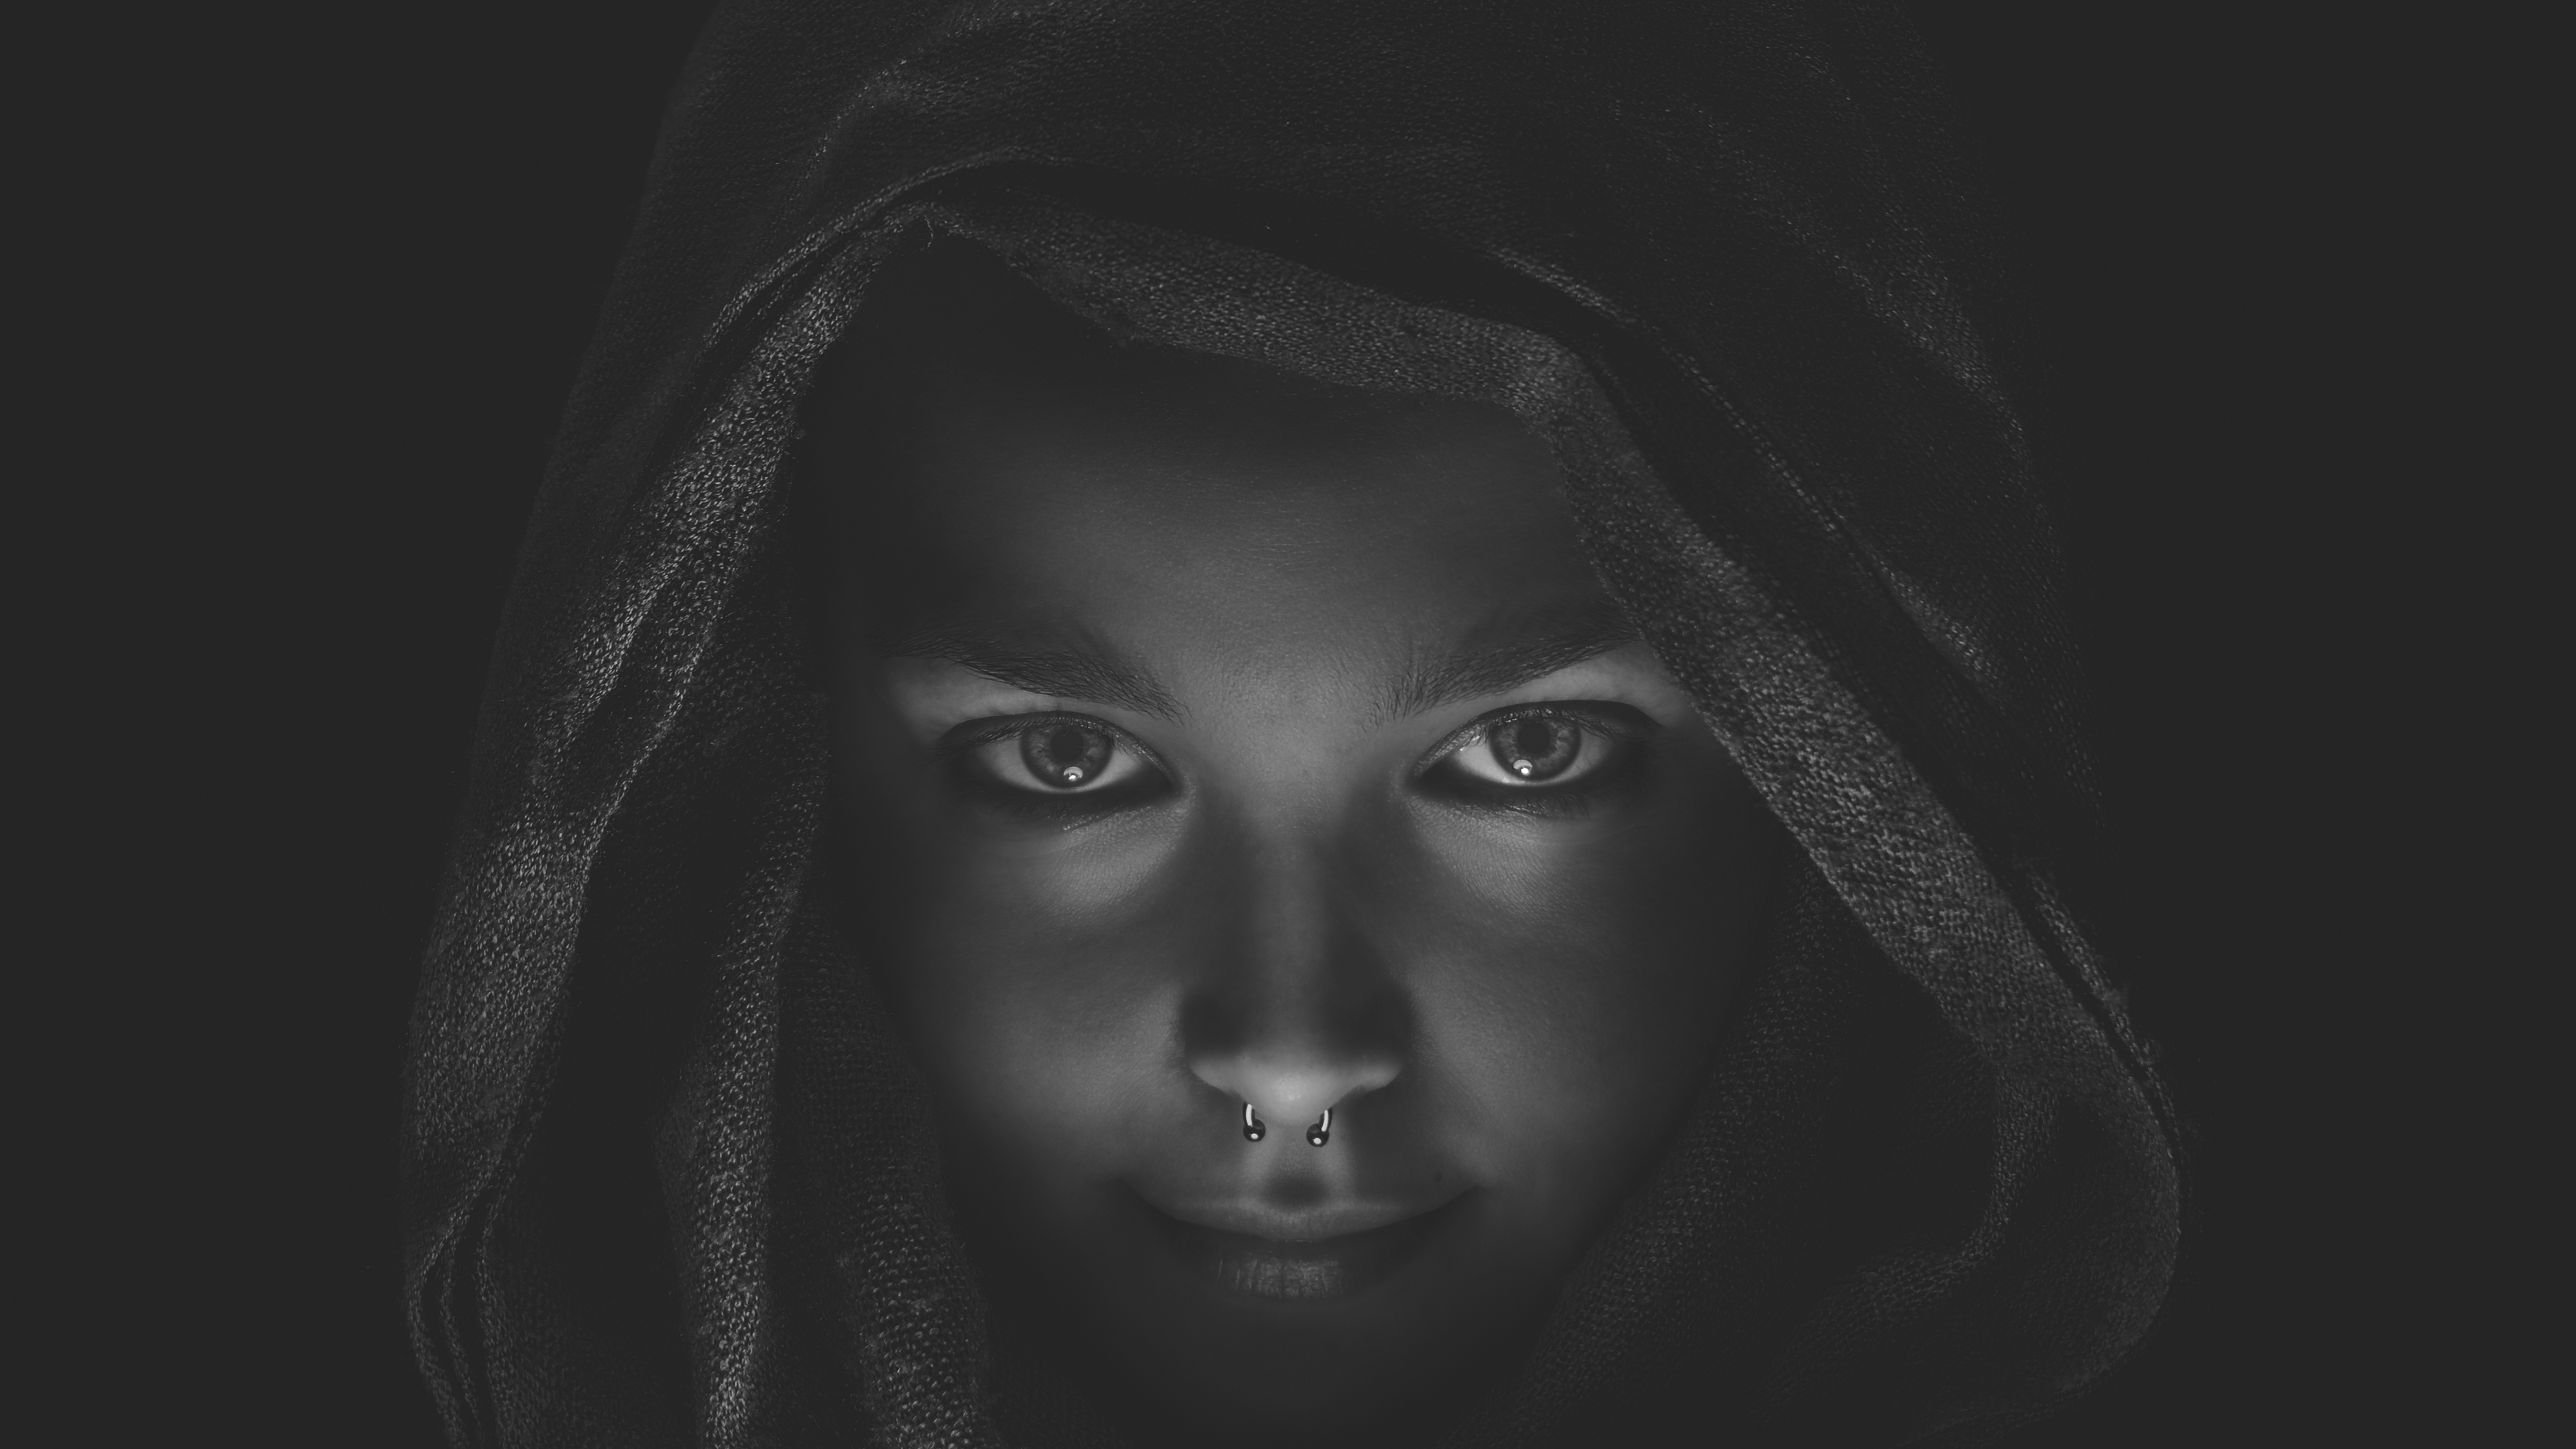 Dark goth portrait by Free-Photos